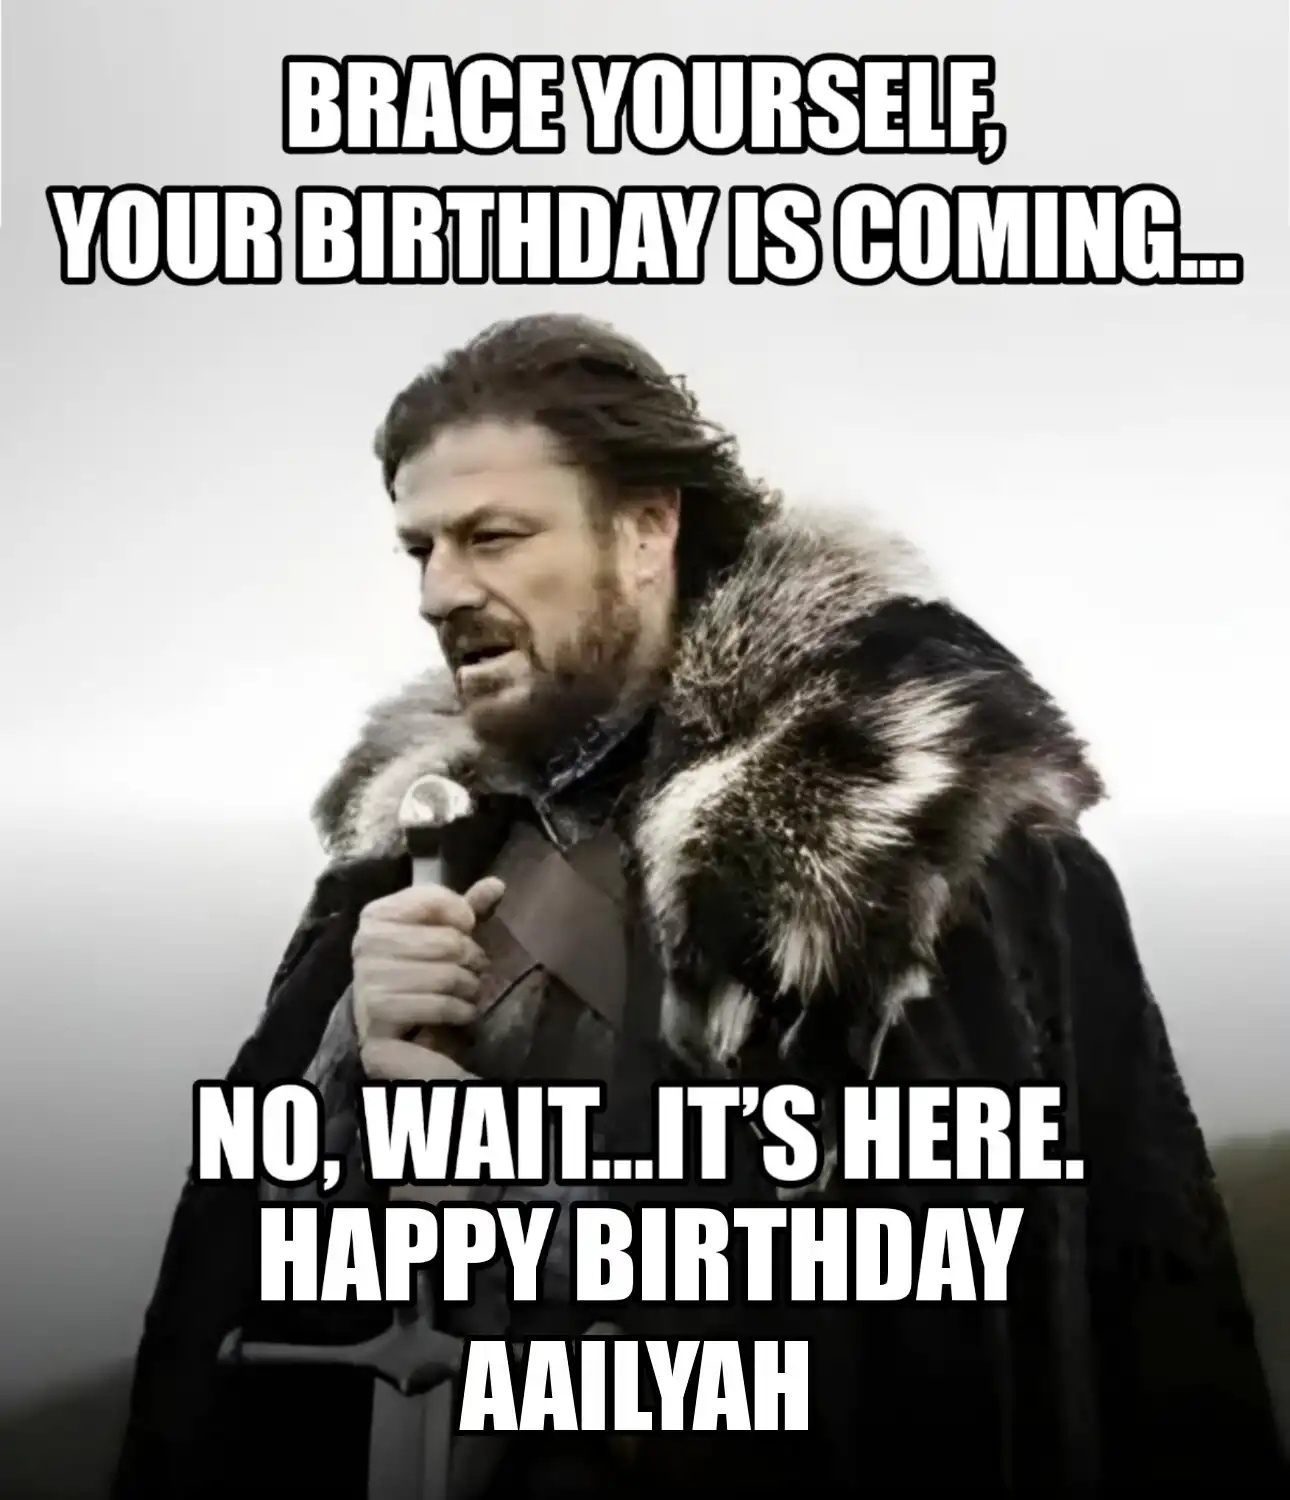 Happy Birthday Aailyah Brace Yourself Your Birthday Is Coming Meme